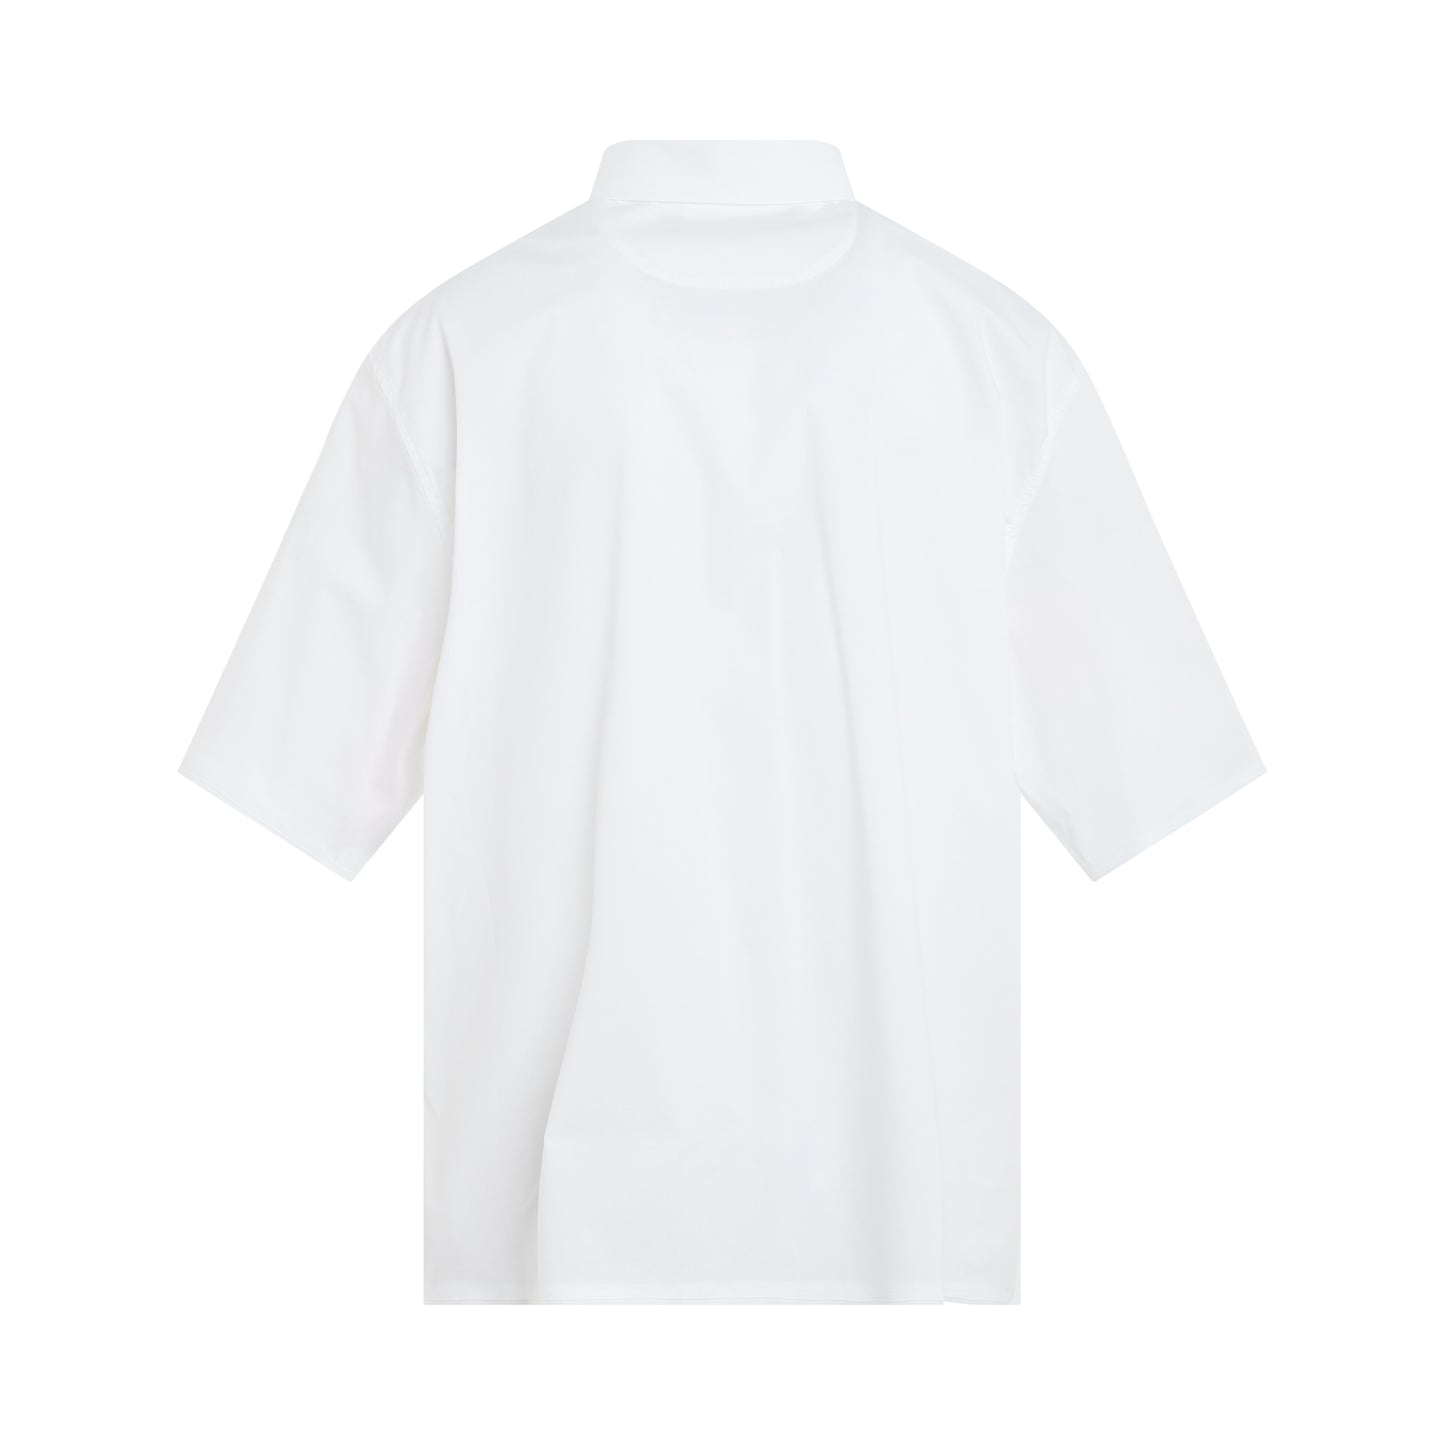 Cabri Organic Statue Print Short Sleeve Shirt in Black/White